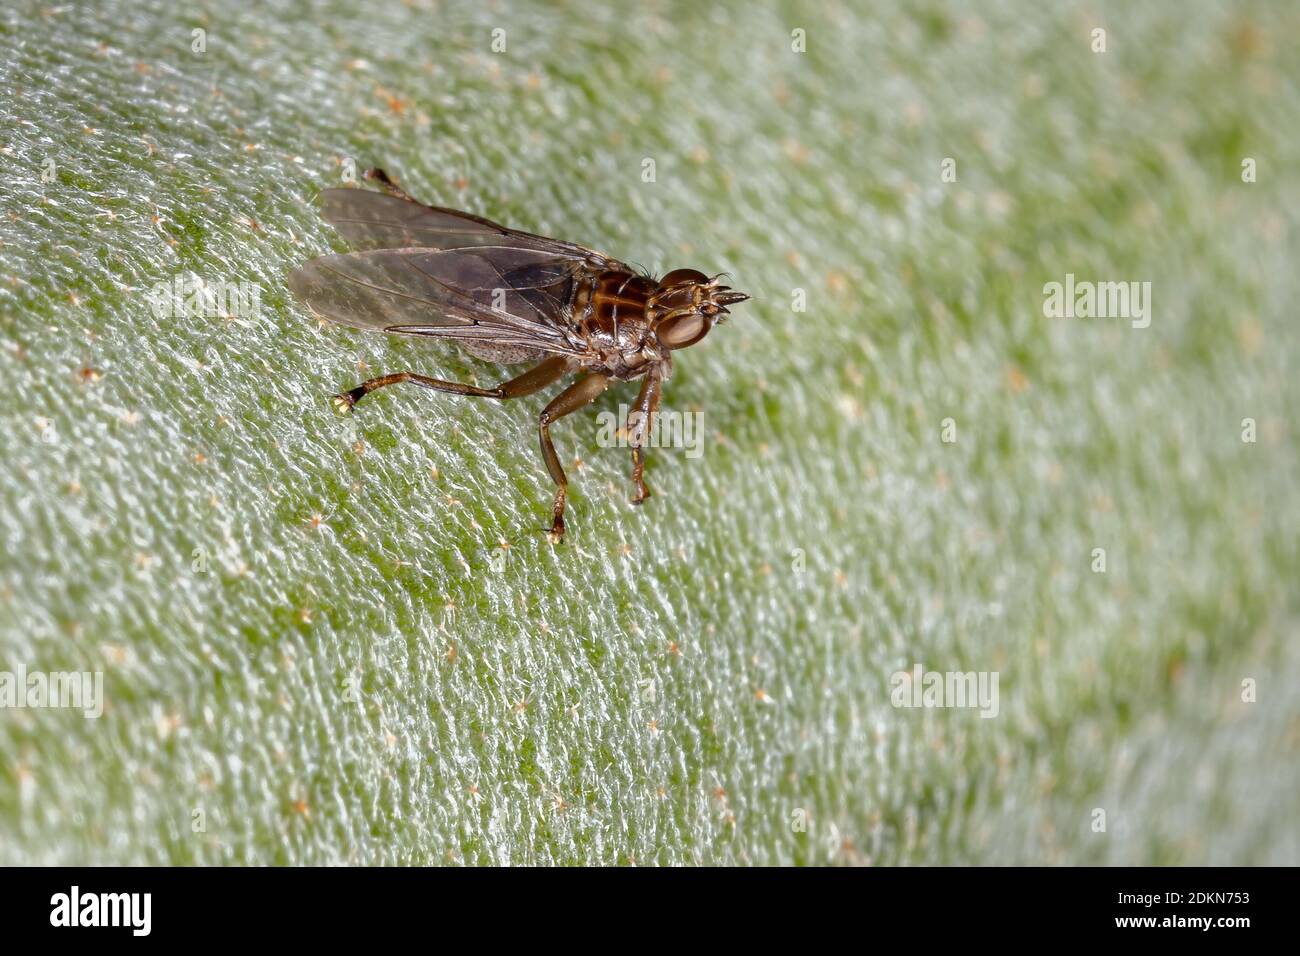 Louse Fly of the Family Hippoboscidae Stock Photo